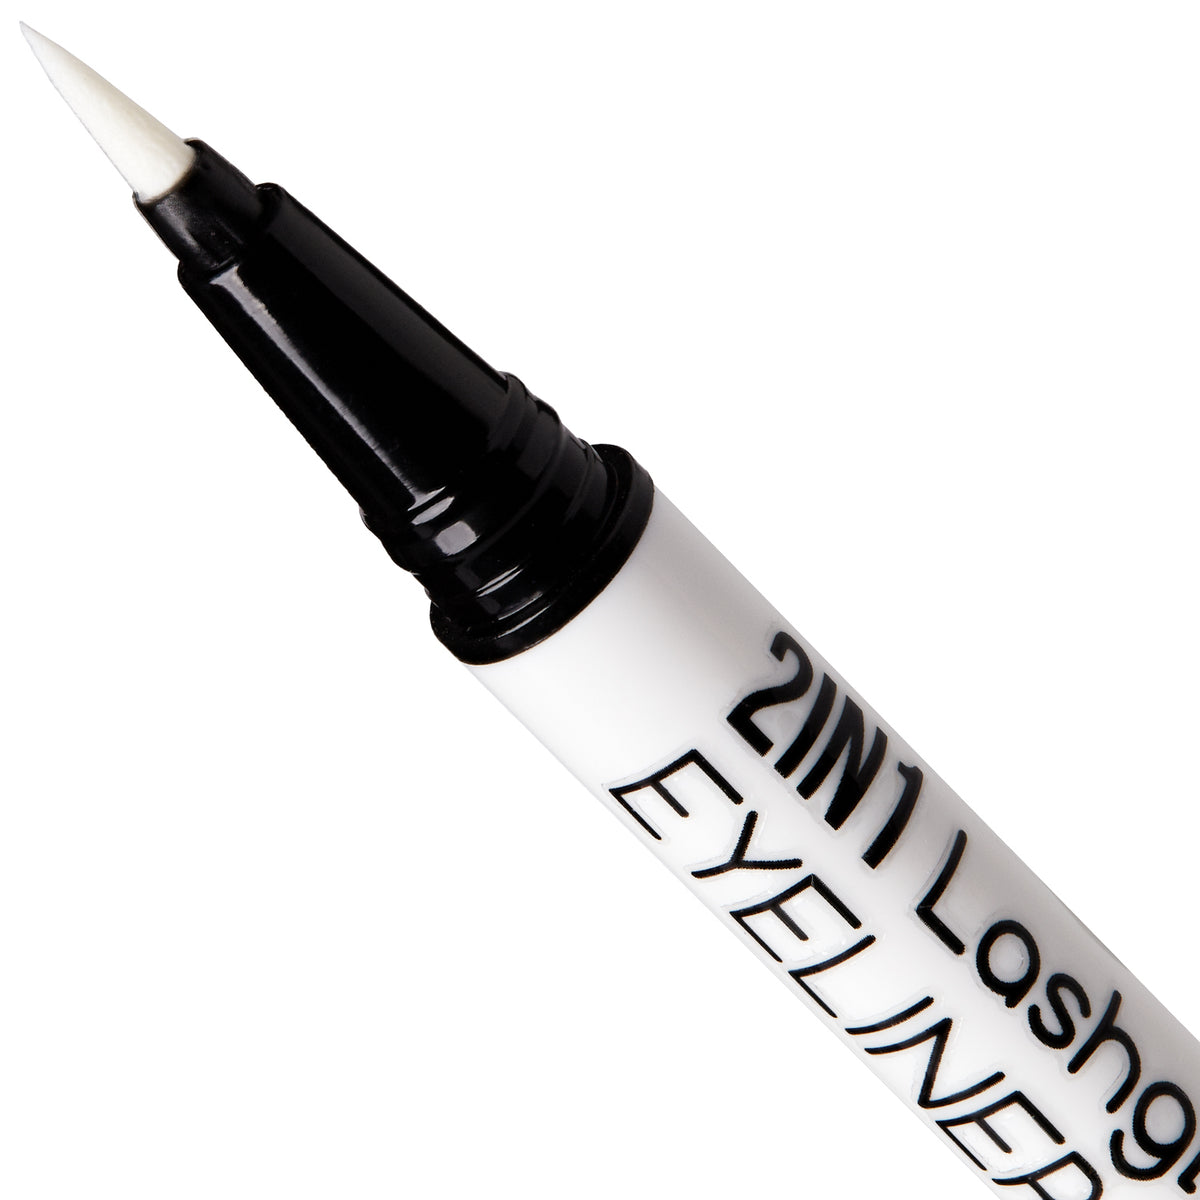 Eyelash glue 2in1 Lash Glue Pen. Colorless